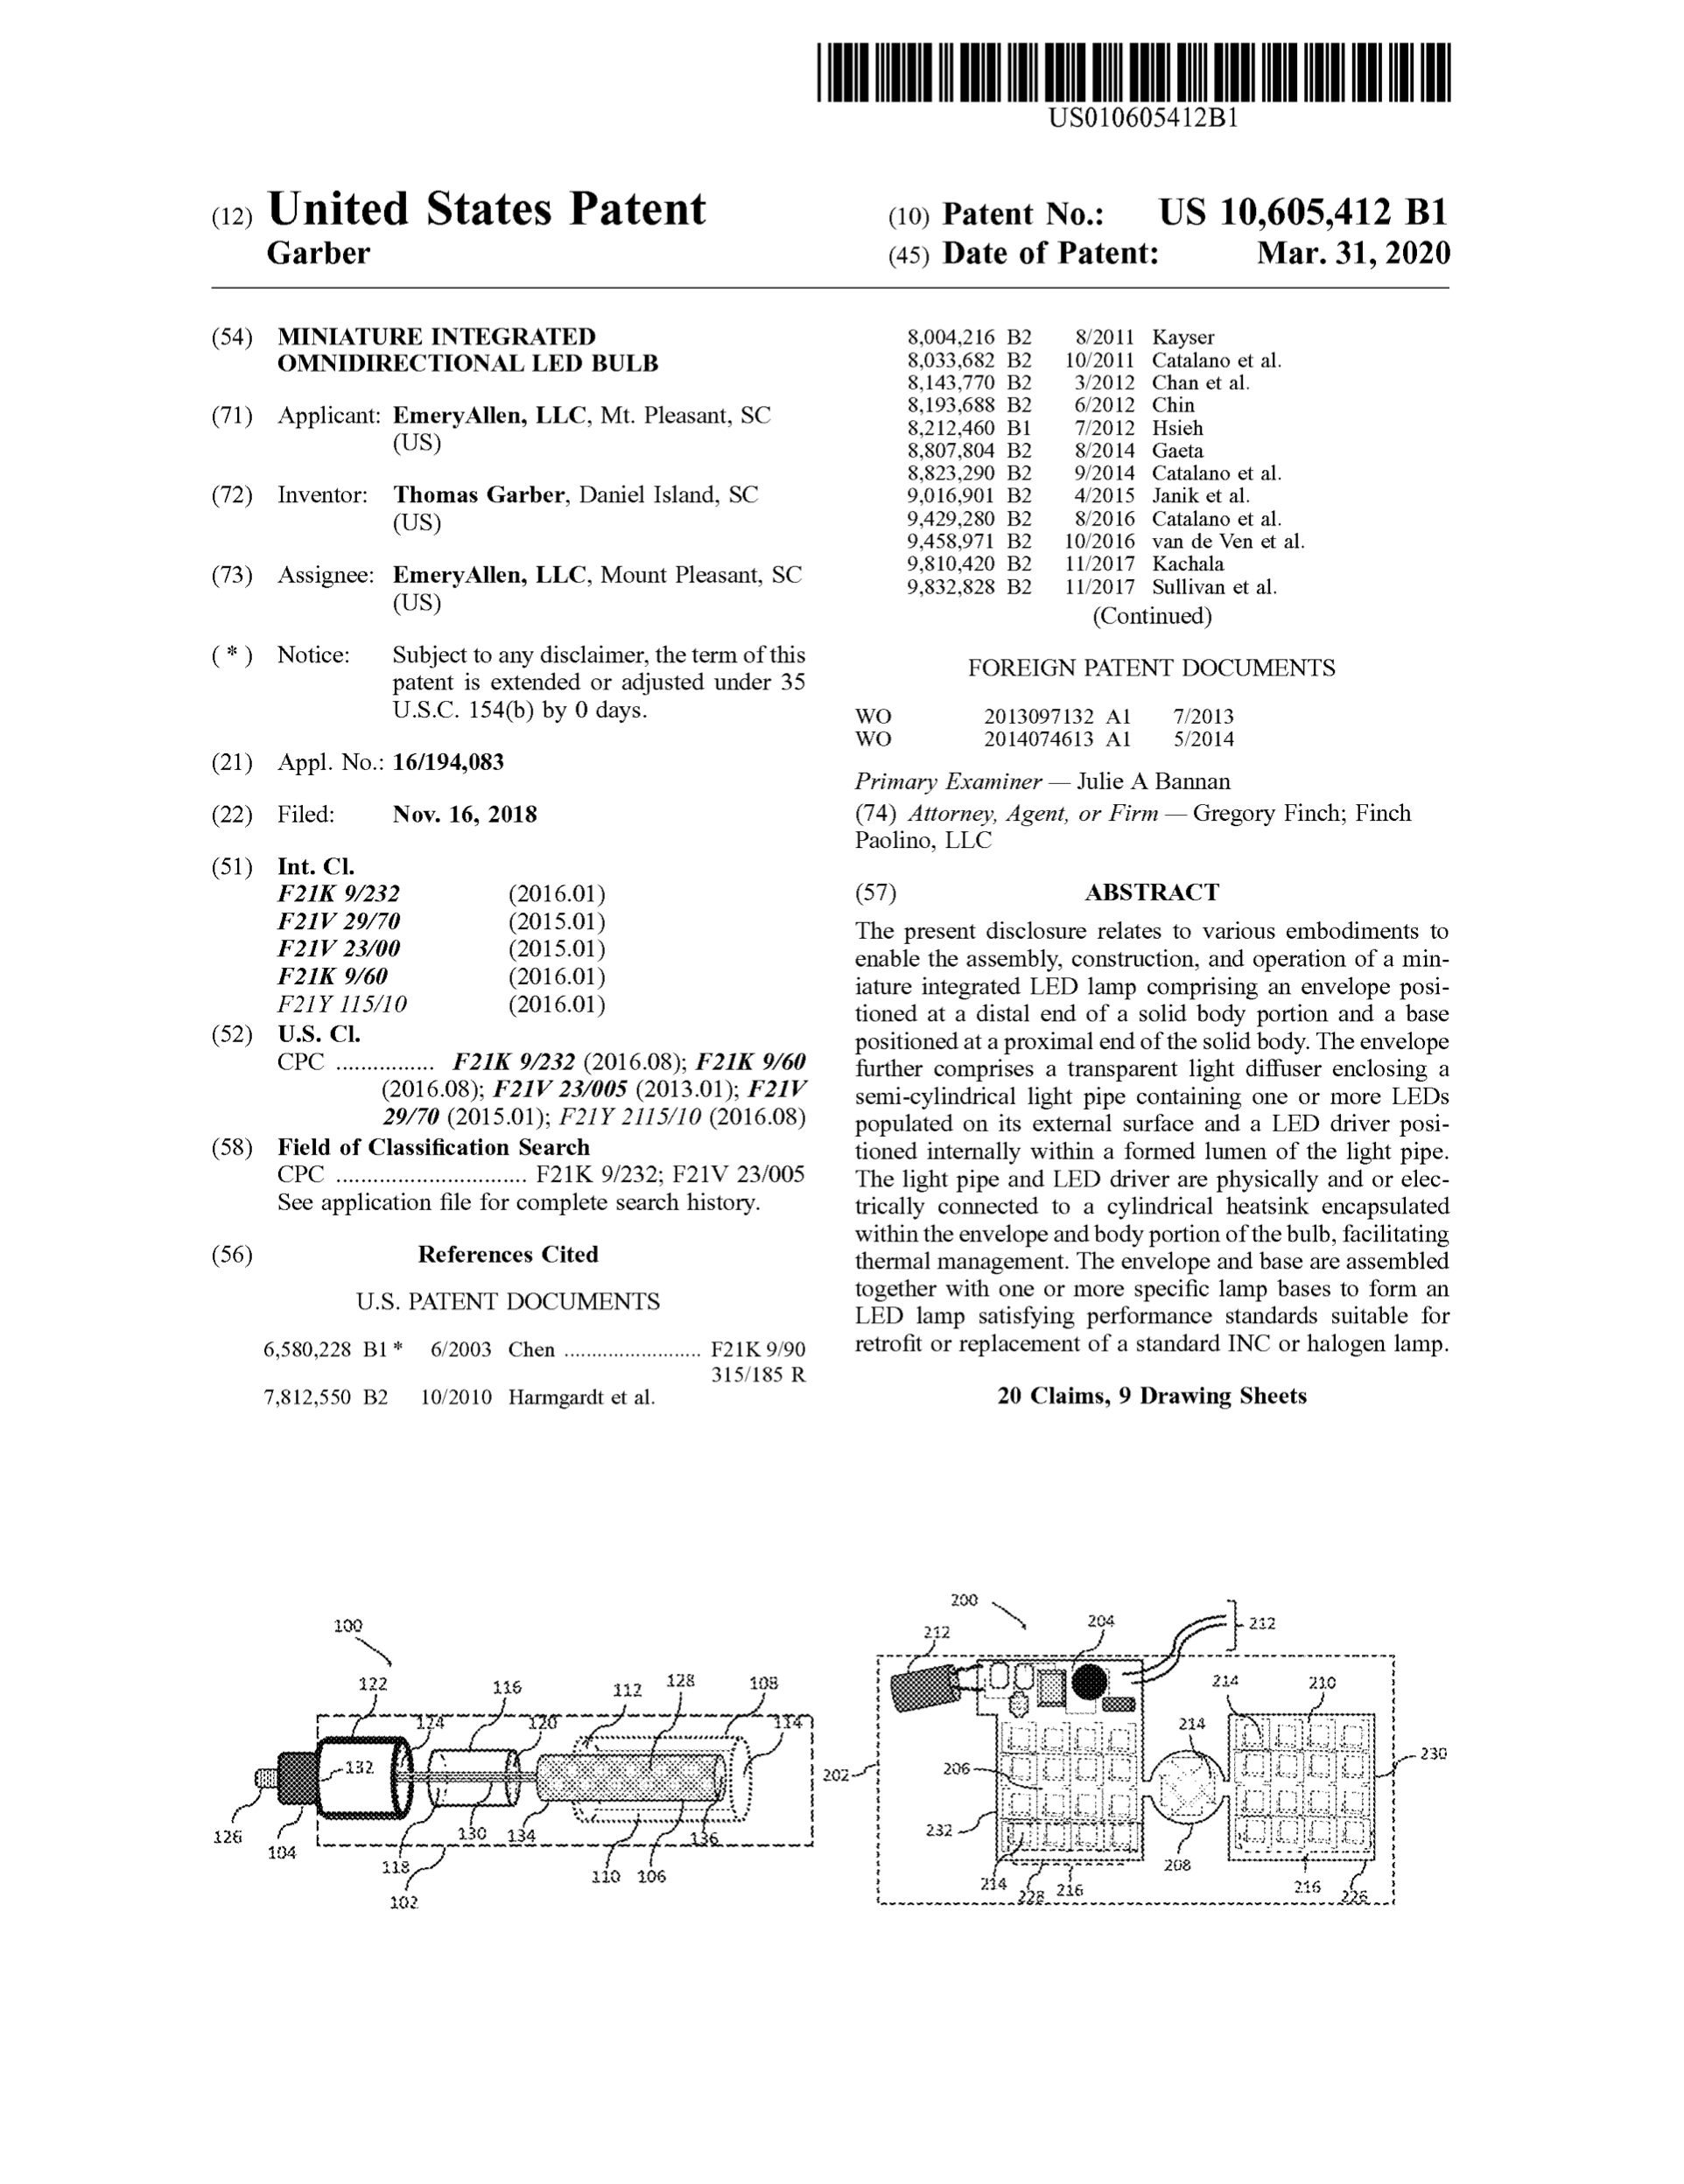 EA Patent 10605412